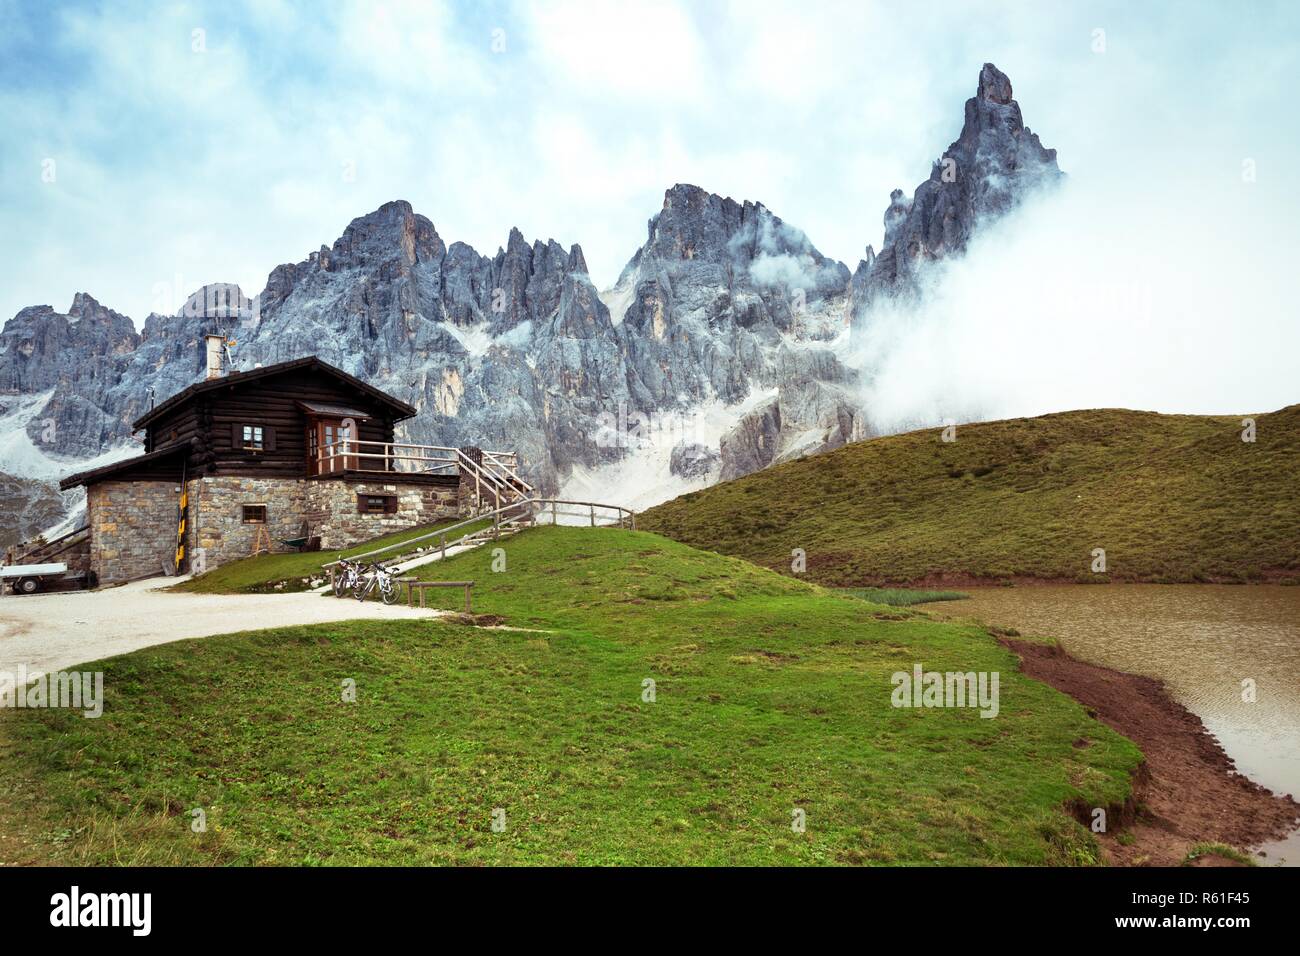 rifugio high at the Dolomites mountains. Italy. Stock Photo